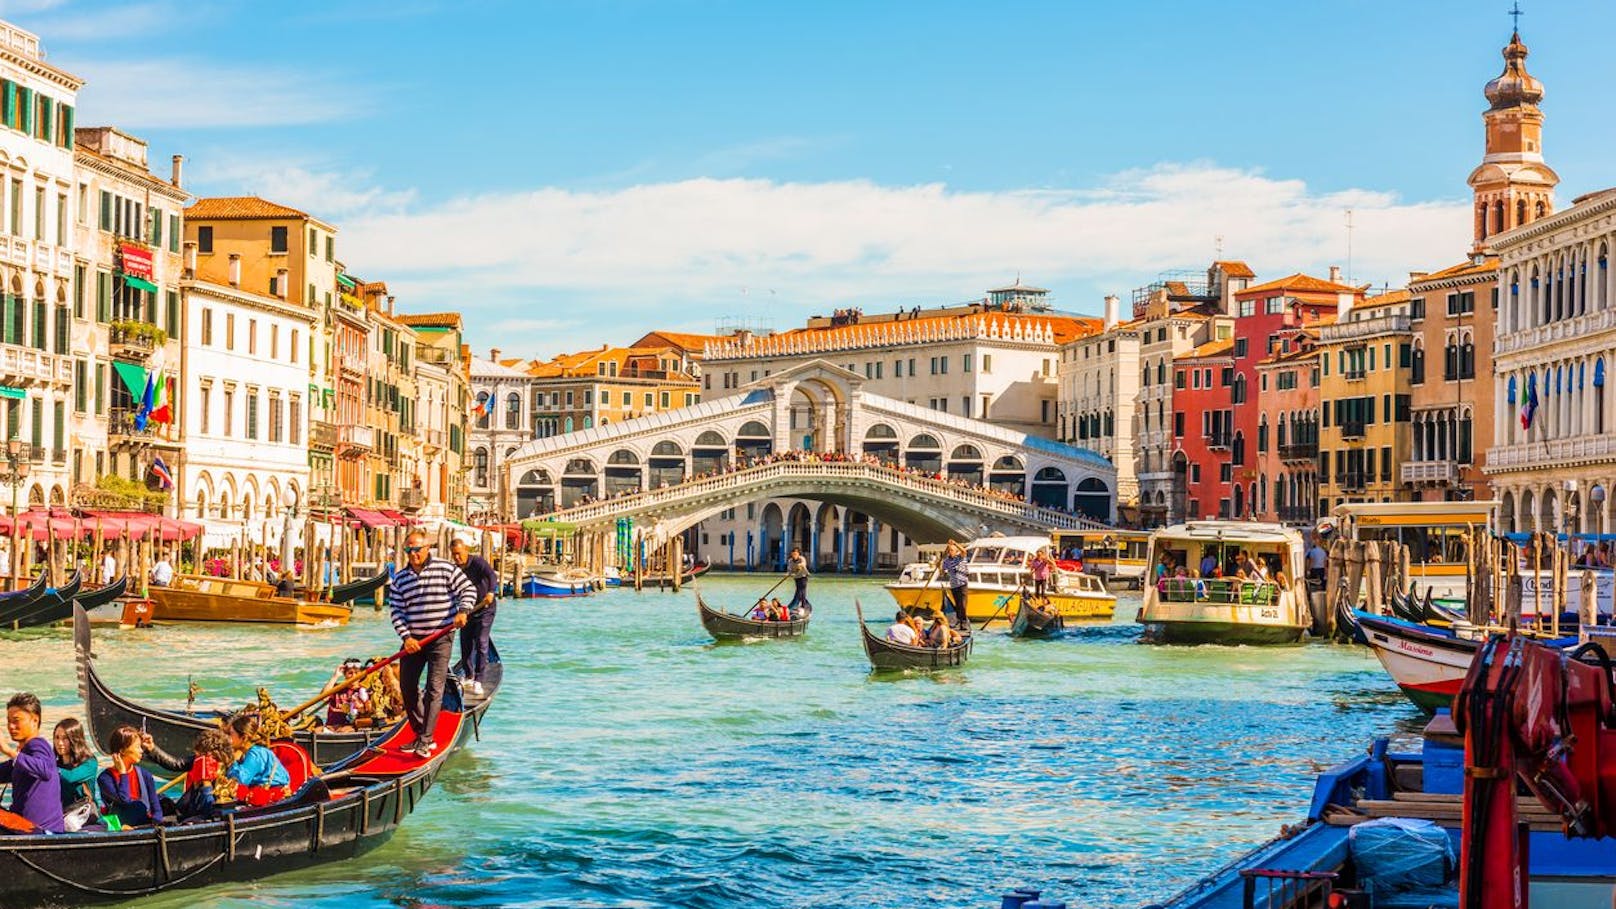 Venedig-Eintritt fix – an diesen Tagen musst du zahlen